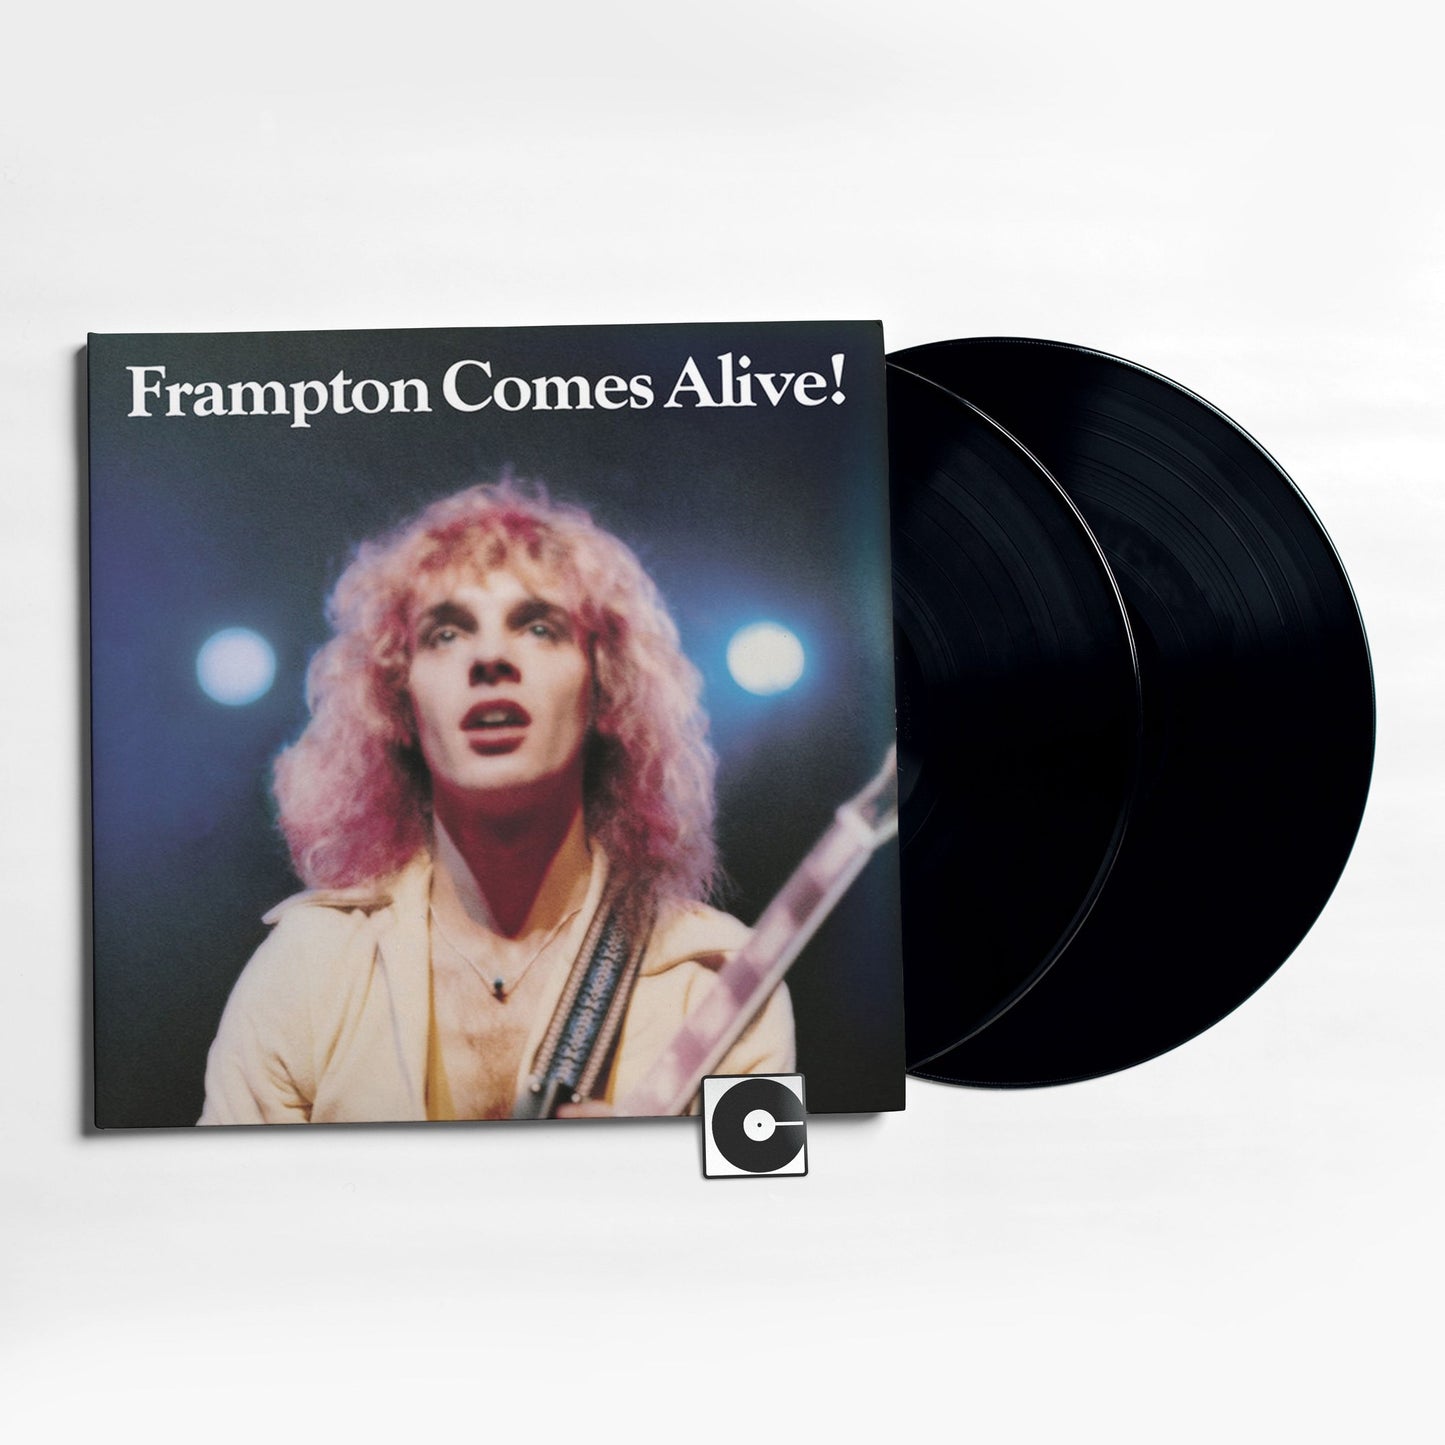 Peter Frampton - "Frampton Comes Alive"